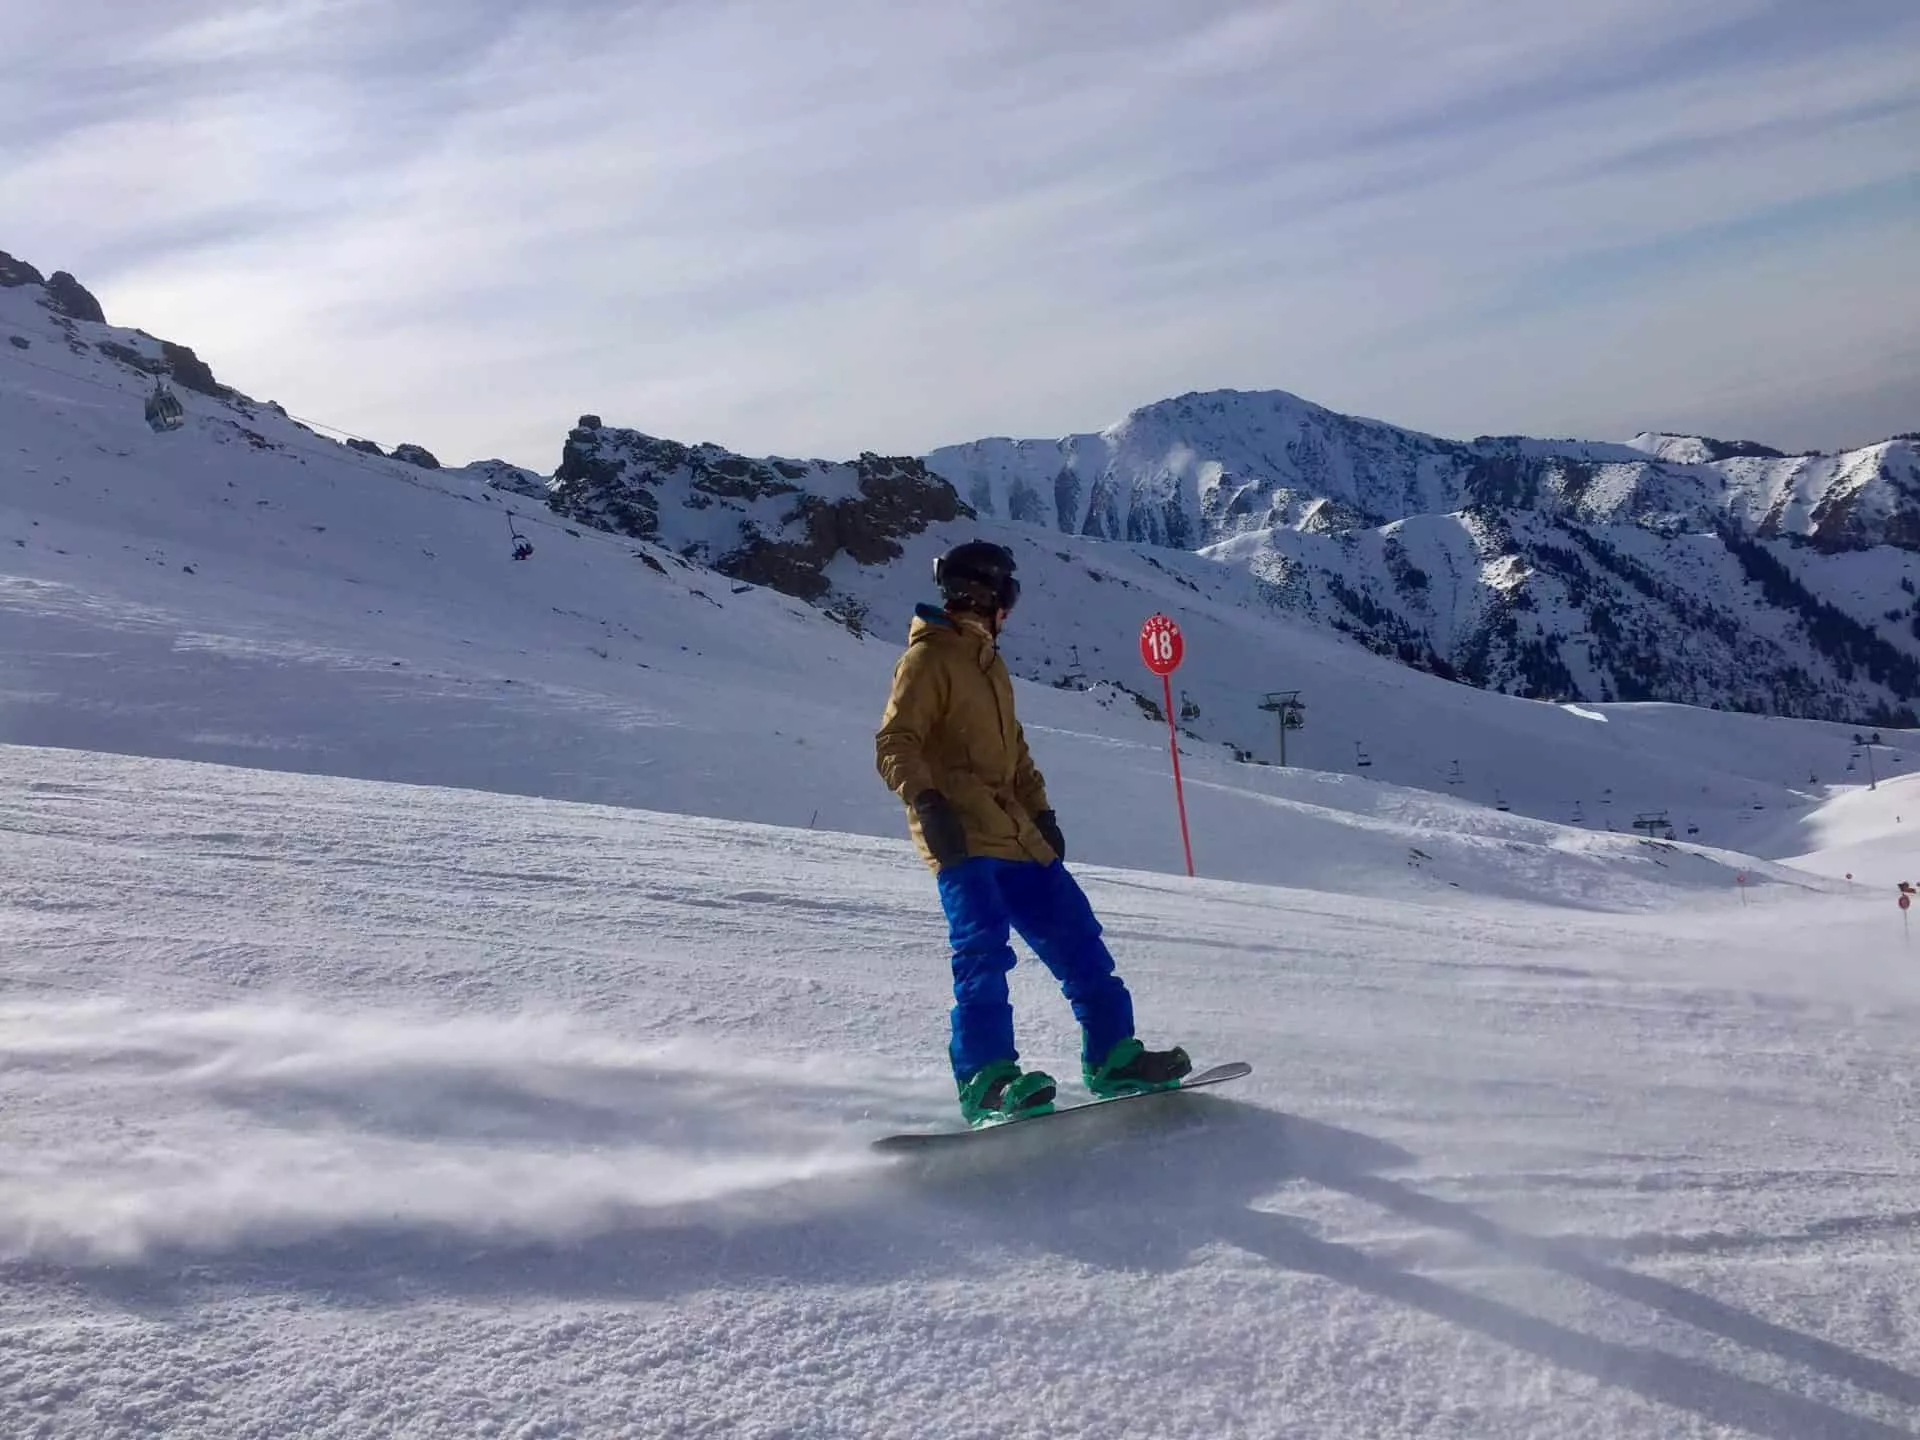 Ak Bulak Ski Resort in Kazakhstan, Central Asia | Snowboarding,Skiing - Rated 4.4